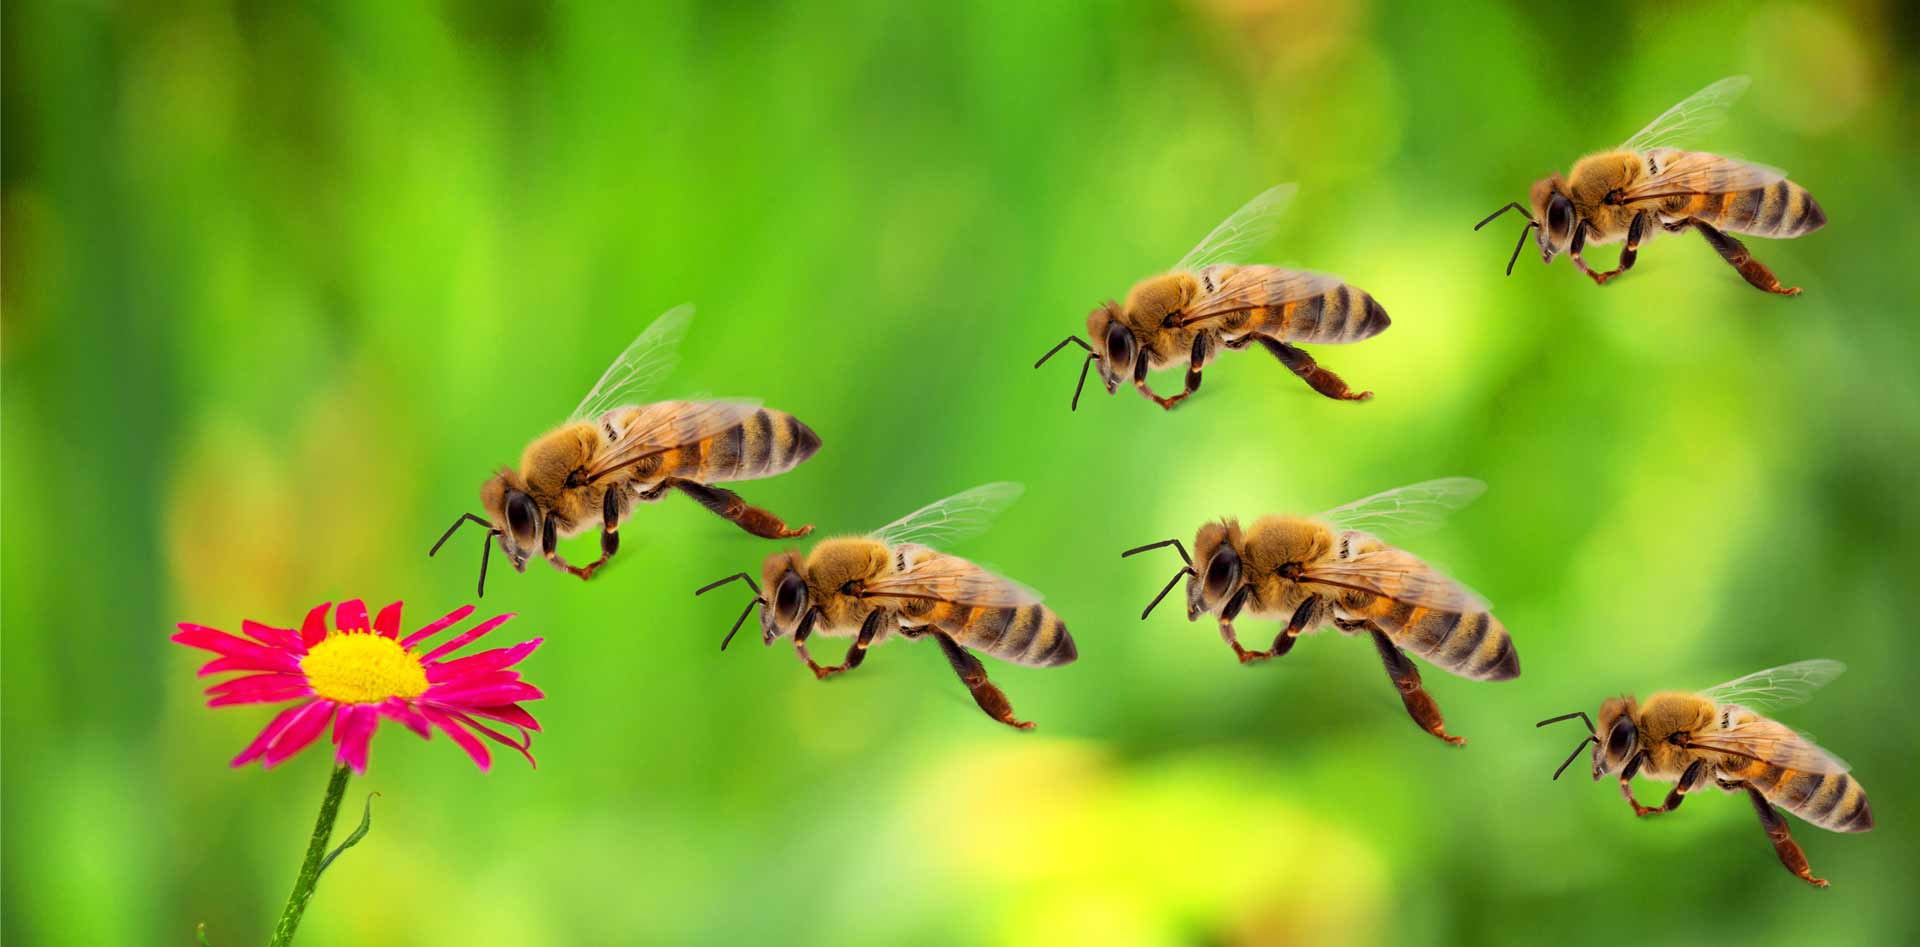 Bienenfoto (Foto: billindigital)